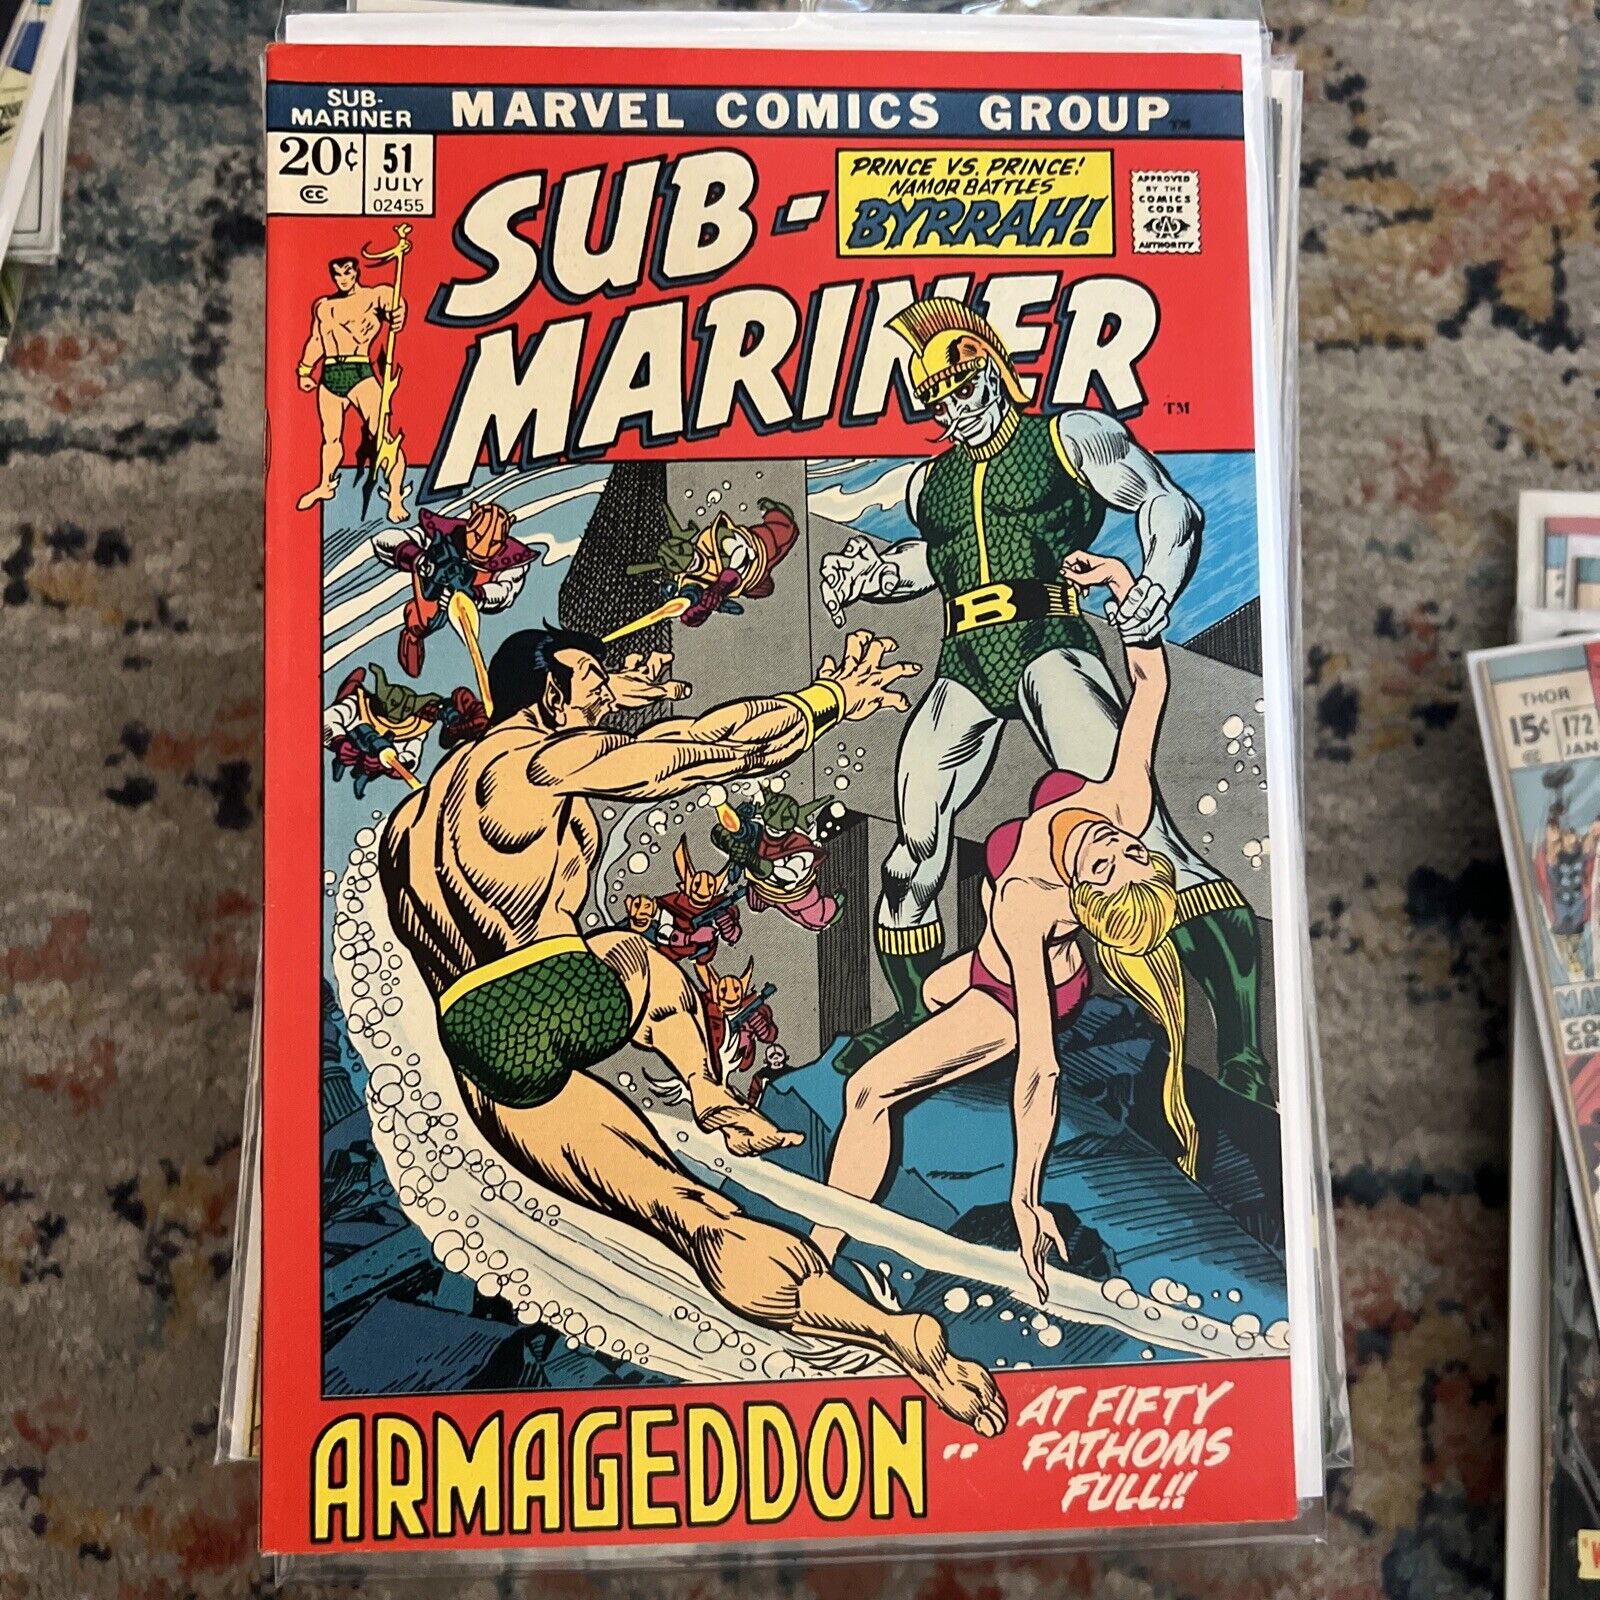 SUB MARINER #51 VF/NM July 1972 BYRRAH Vintage Marvel Comics Higher Grade